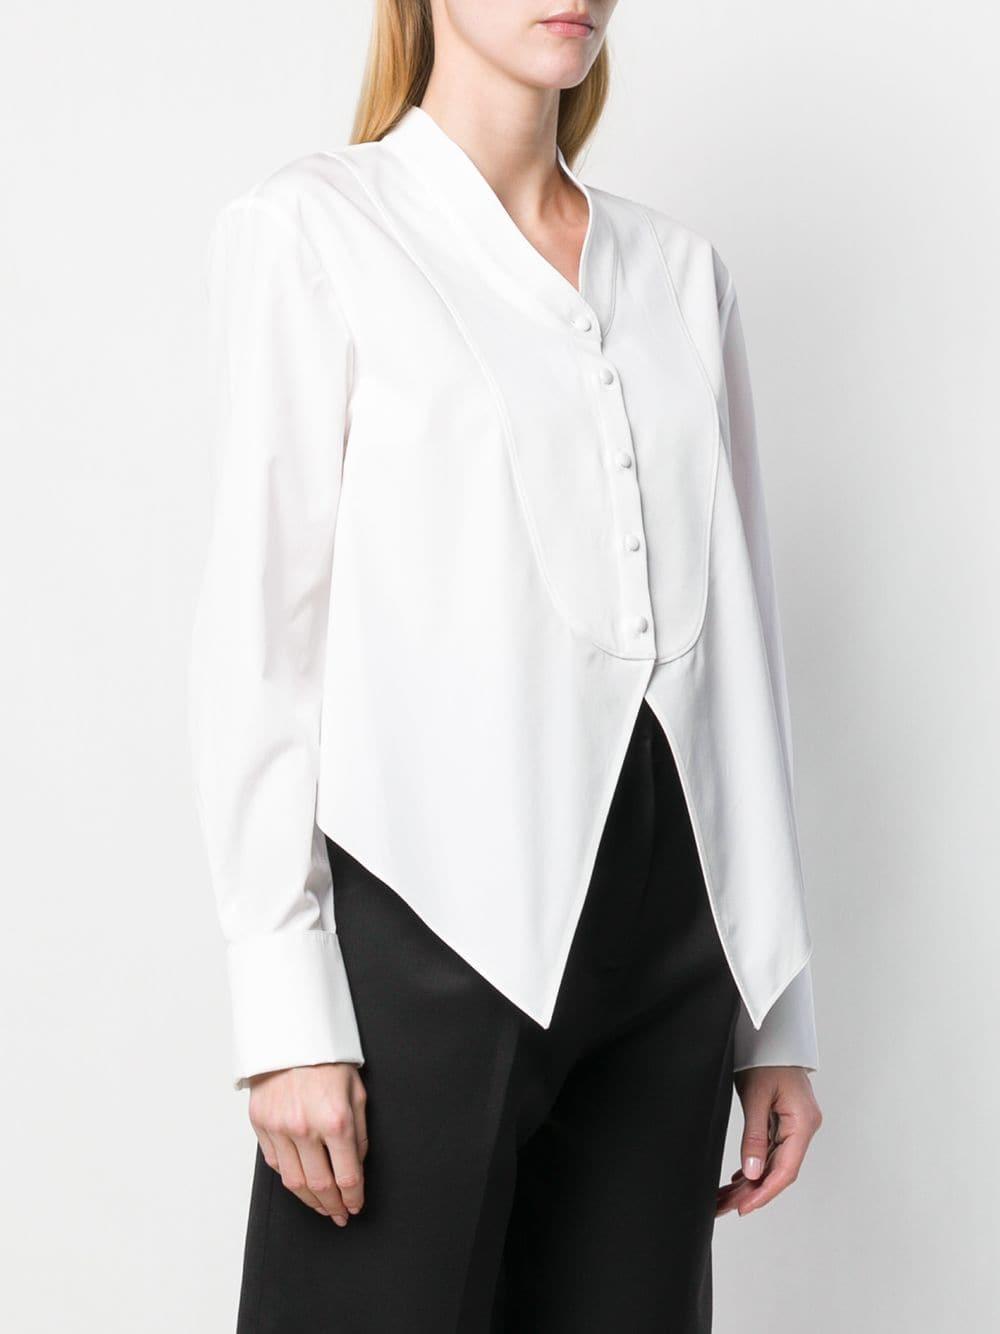 Lyst - Alexander Wang Plain Poplin Shirt in White